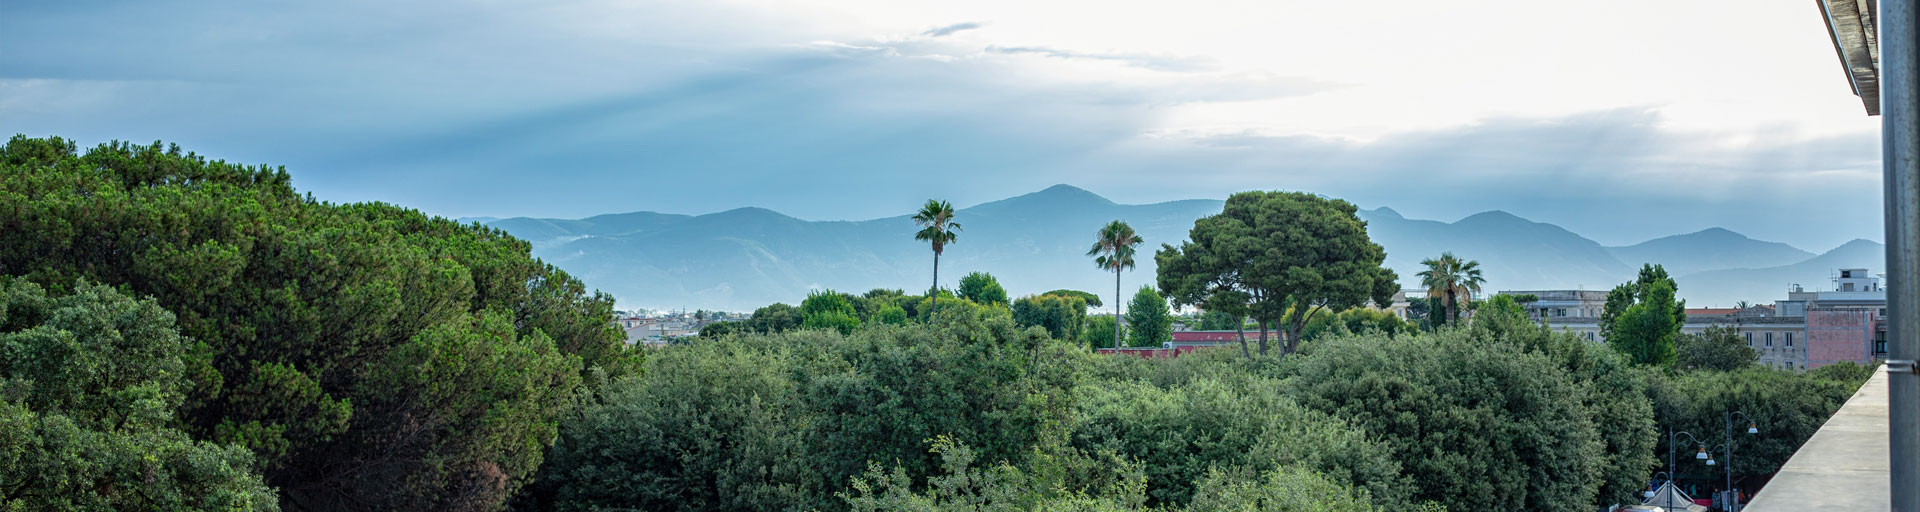 Dall'Hotel, vista panoramica su Pompei